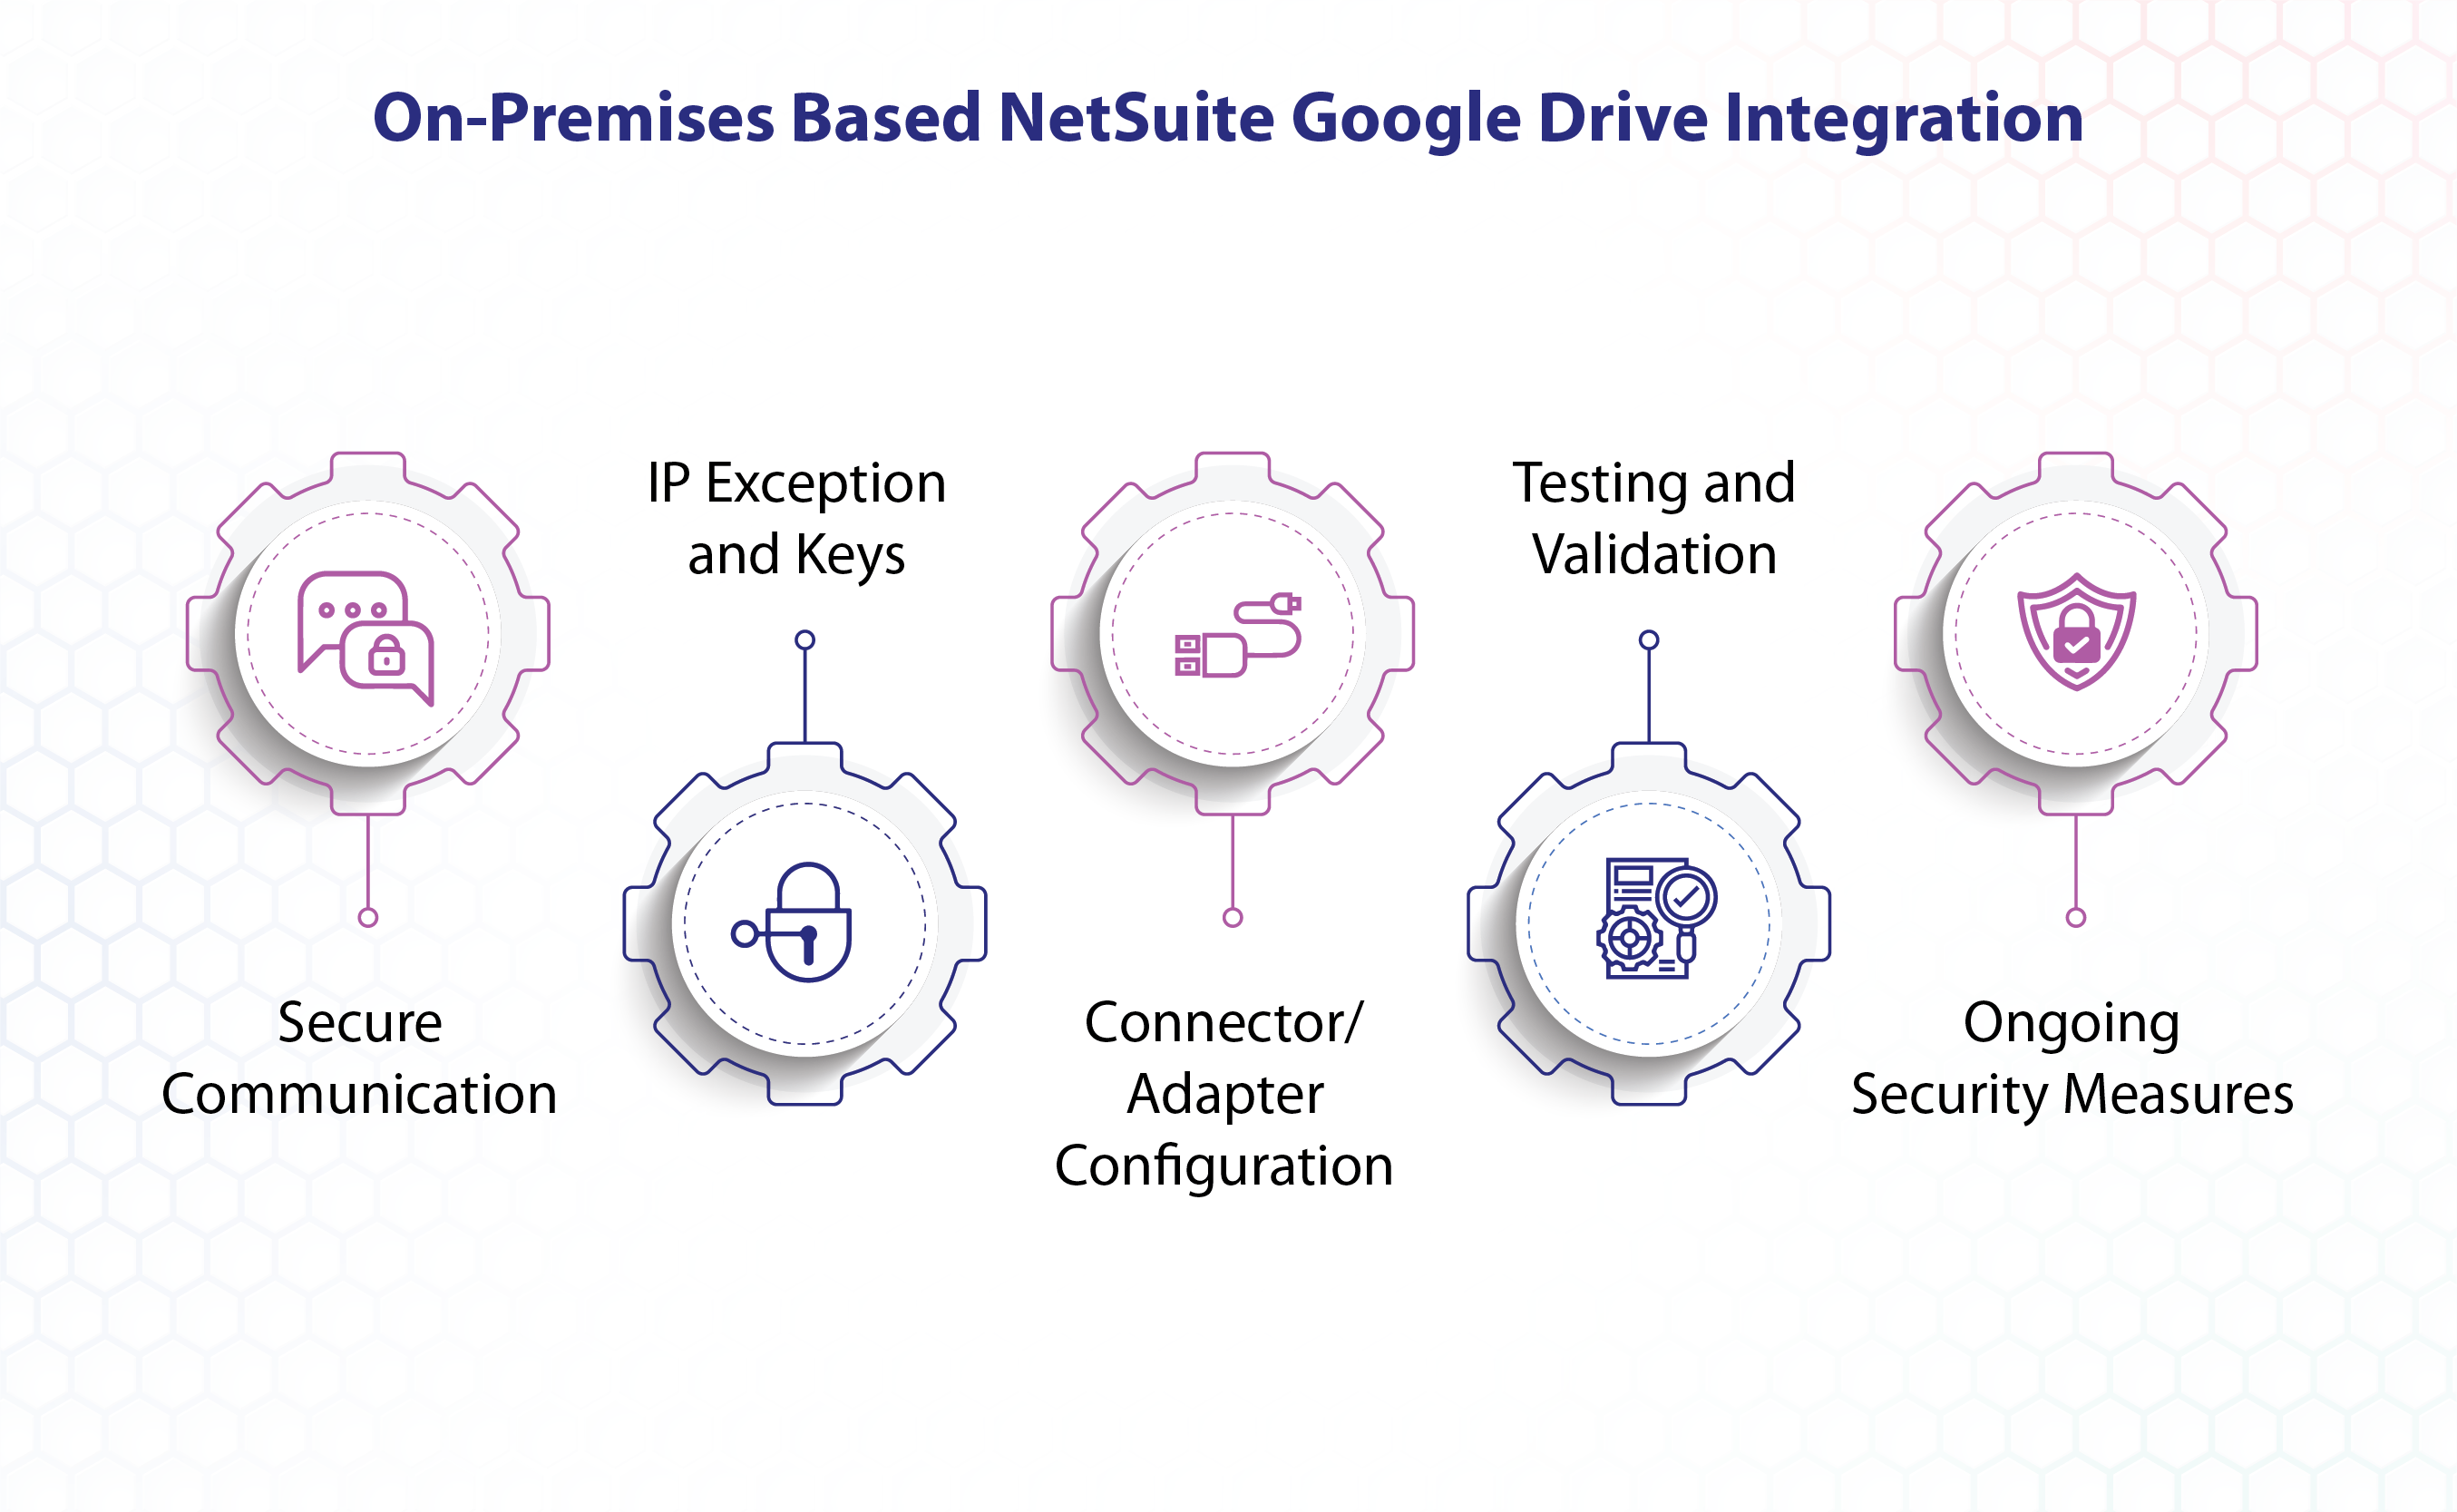 On Premises based NetSuite Google Drive Integration